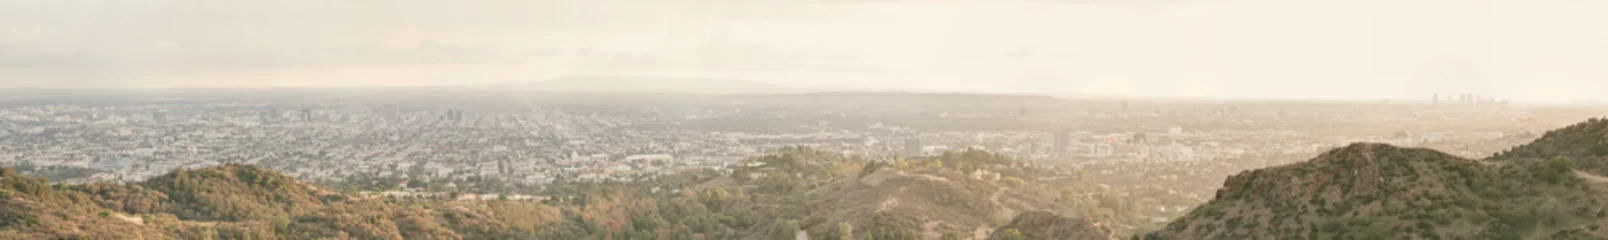 Lichtdoorlatende gordijnen Los Angeles Panoramic view of Los angeles city